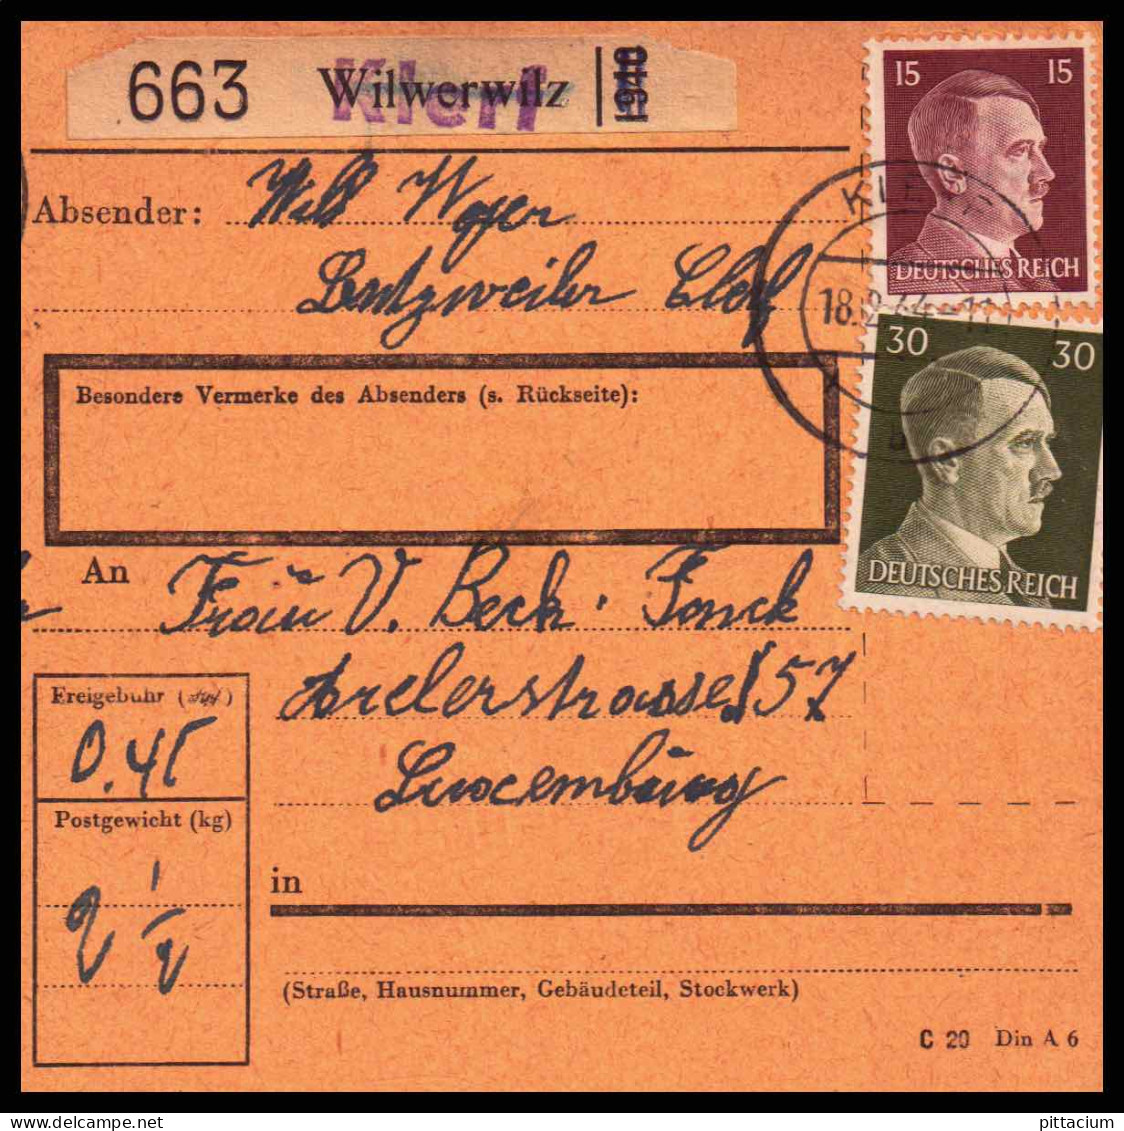 Luxemburg 1944: Paketkarte  | Besatzung, Bezirksämter, Moselland | Klerf, Kiischpelt, Luxemburg;Luxembourg - 1940-1944 Duitse Bezetting